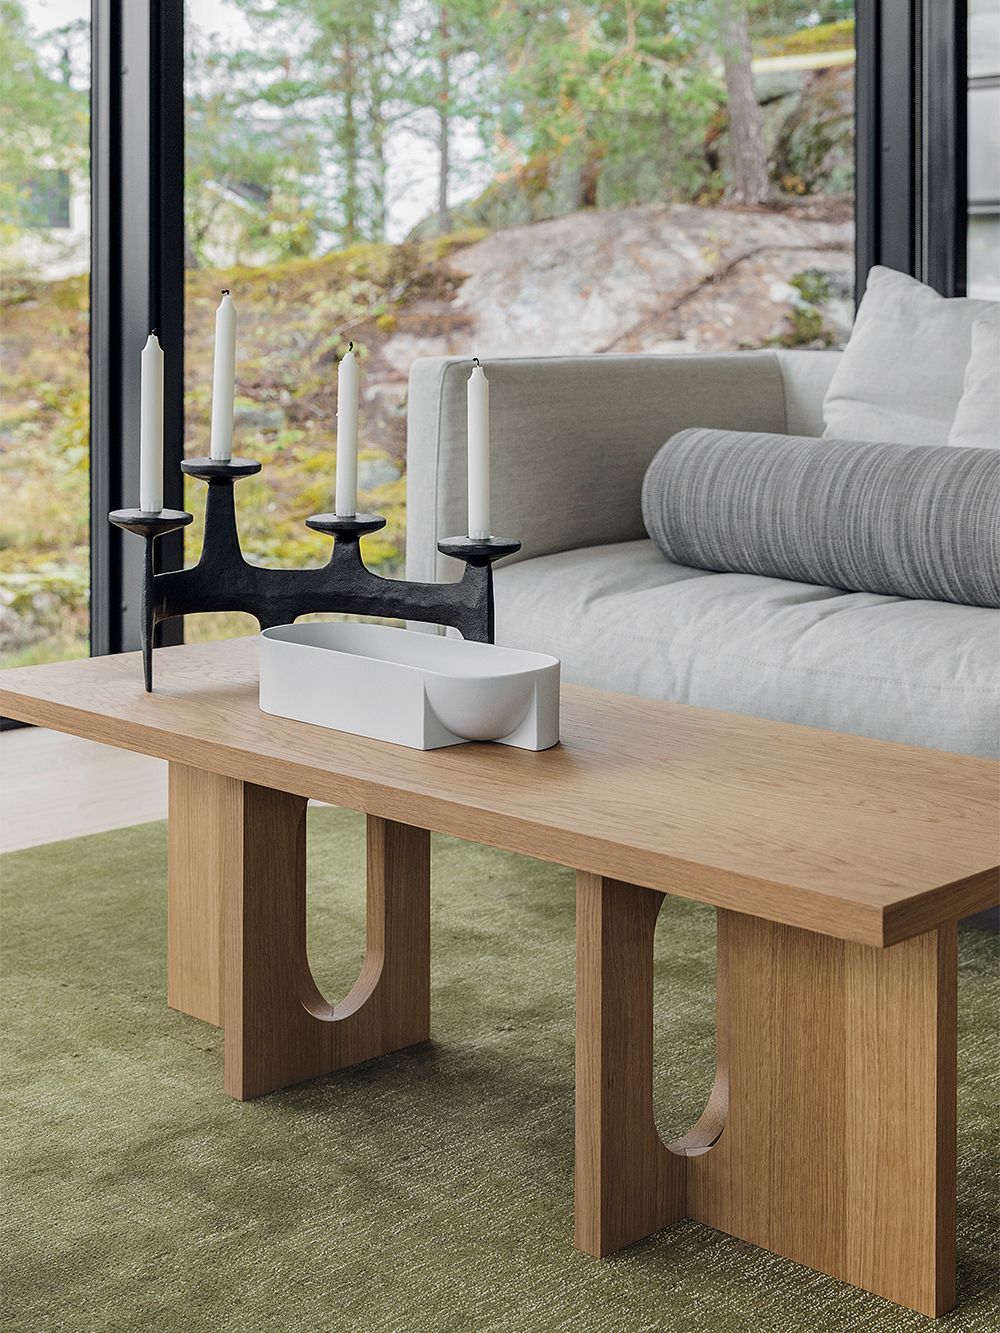 An image of Finnish Design Shop's interior design services reference location, Villa Brygga: the living room decor.